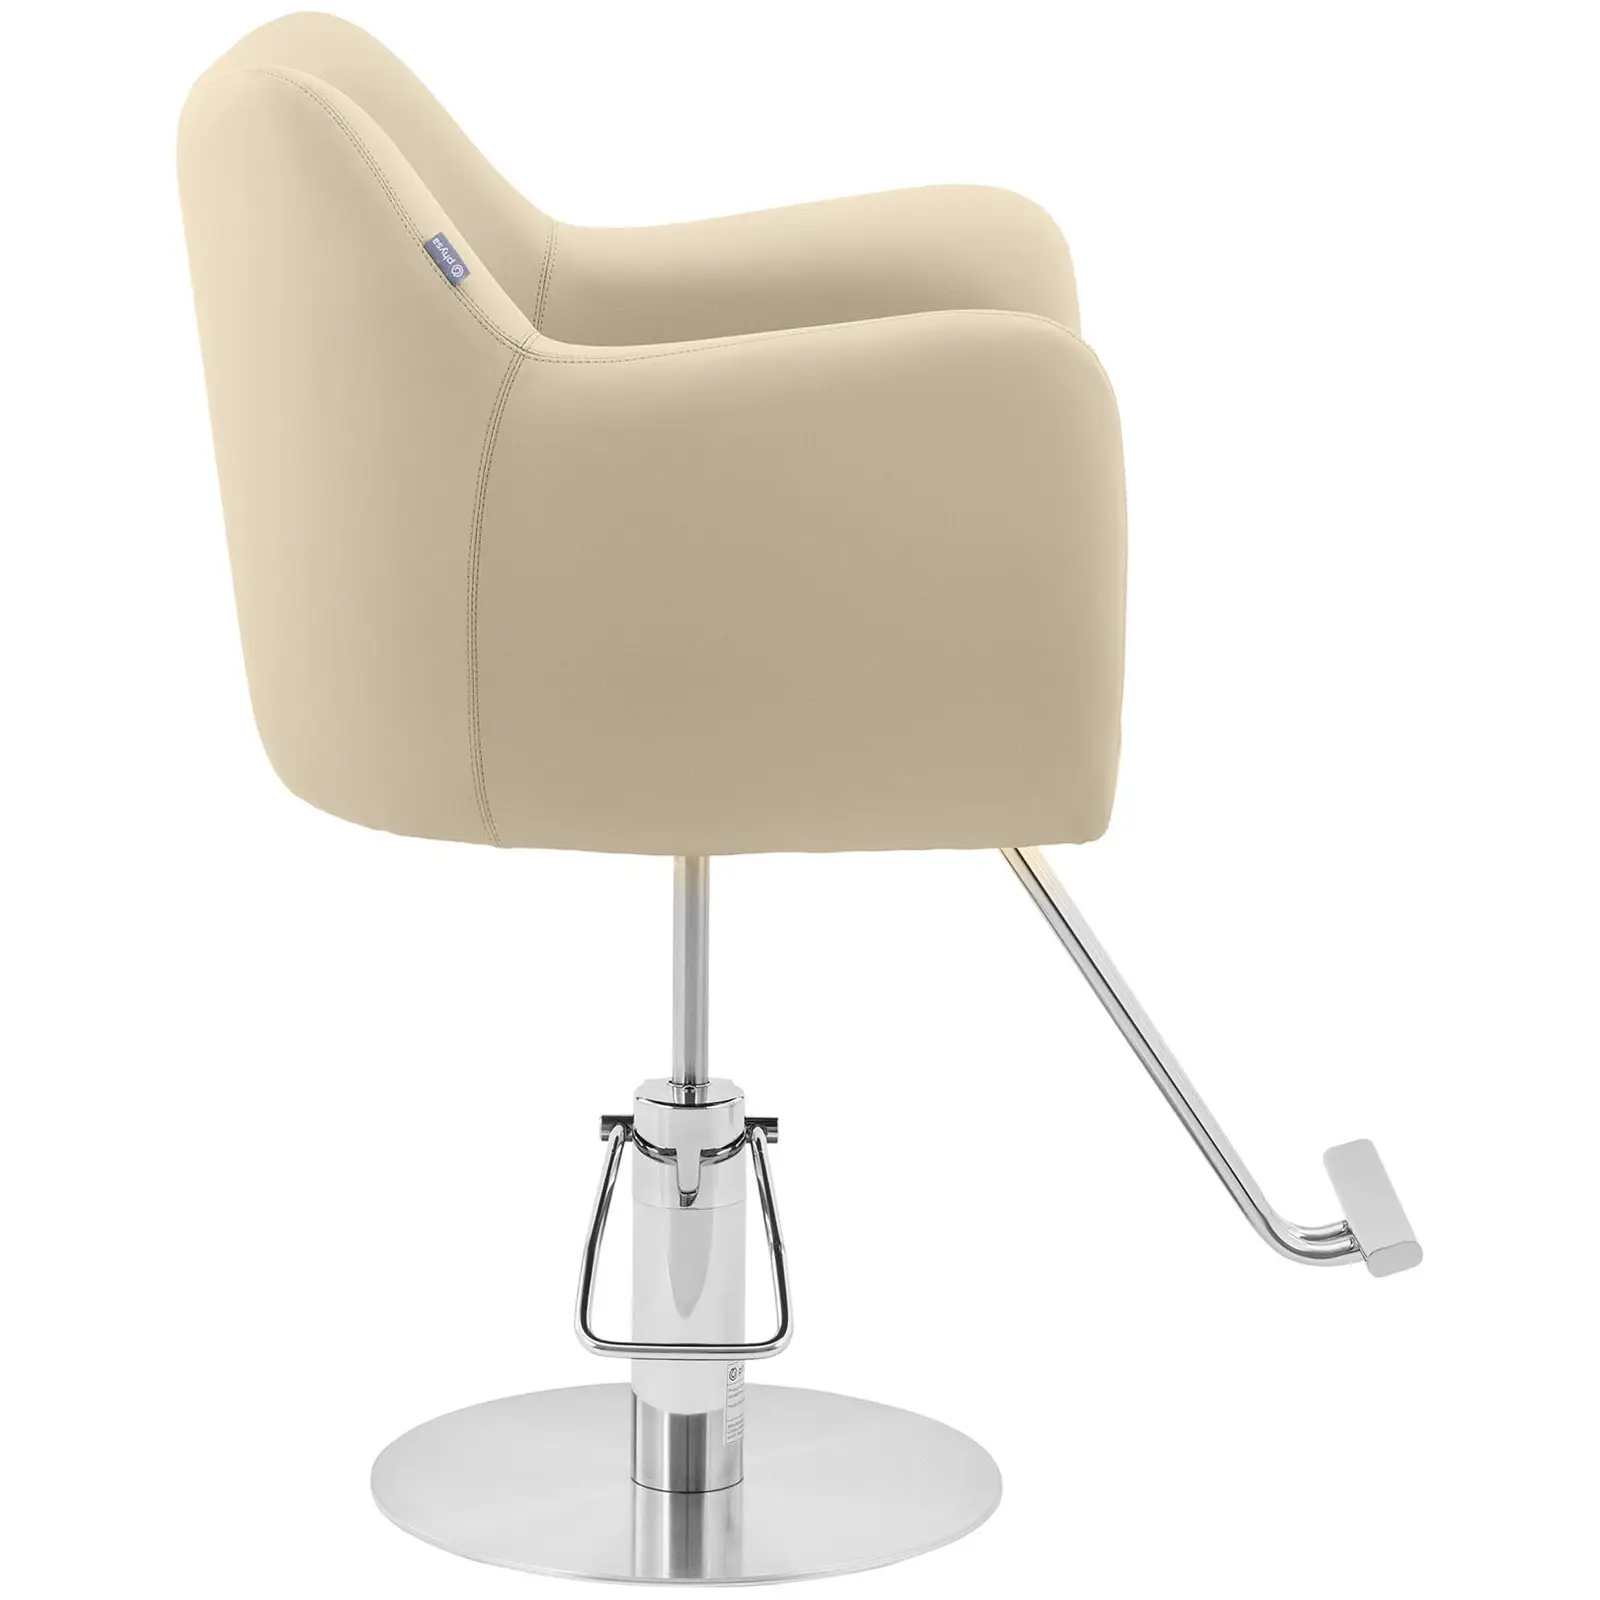 Salon Chair with Footrest - 880 - 1030 mm - 200 kg - Tilbury Beige